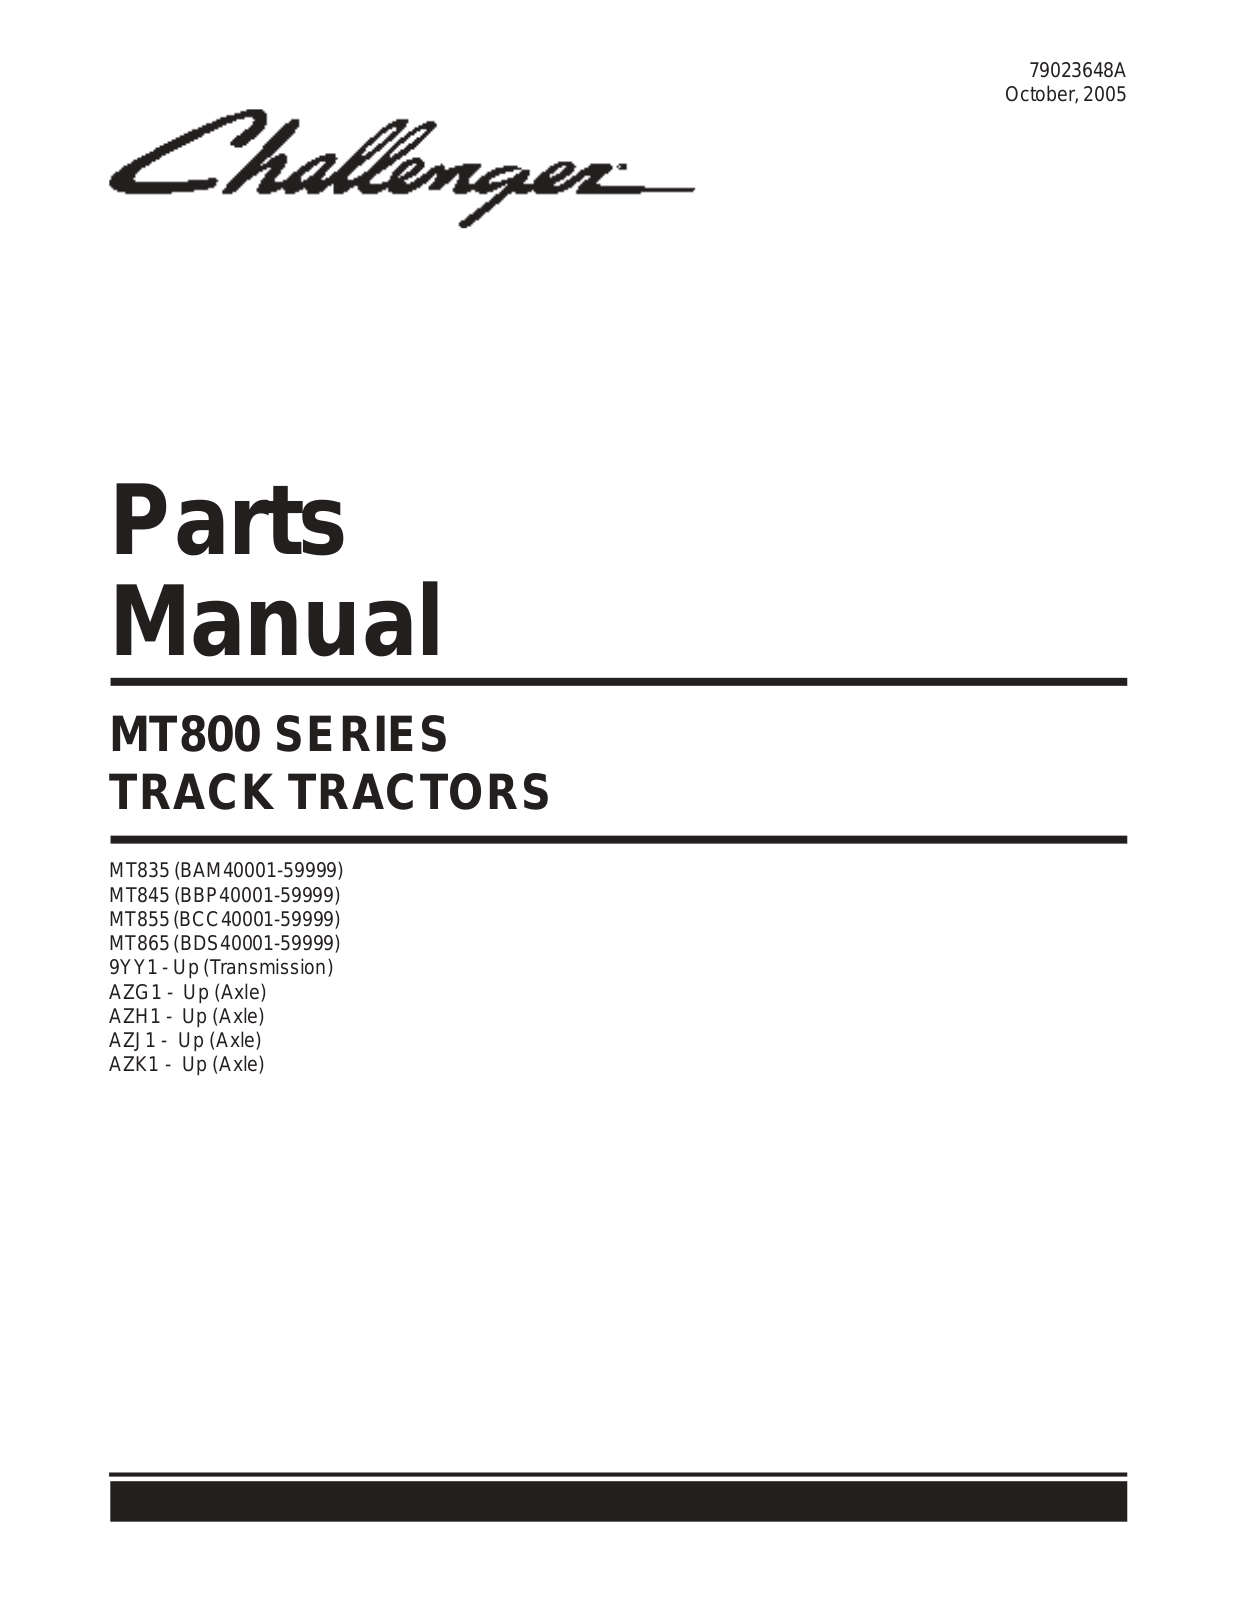 Challenger MT835, MT845, MT855, MT865 Parts Catalogue